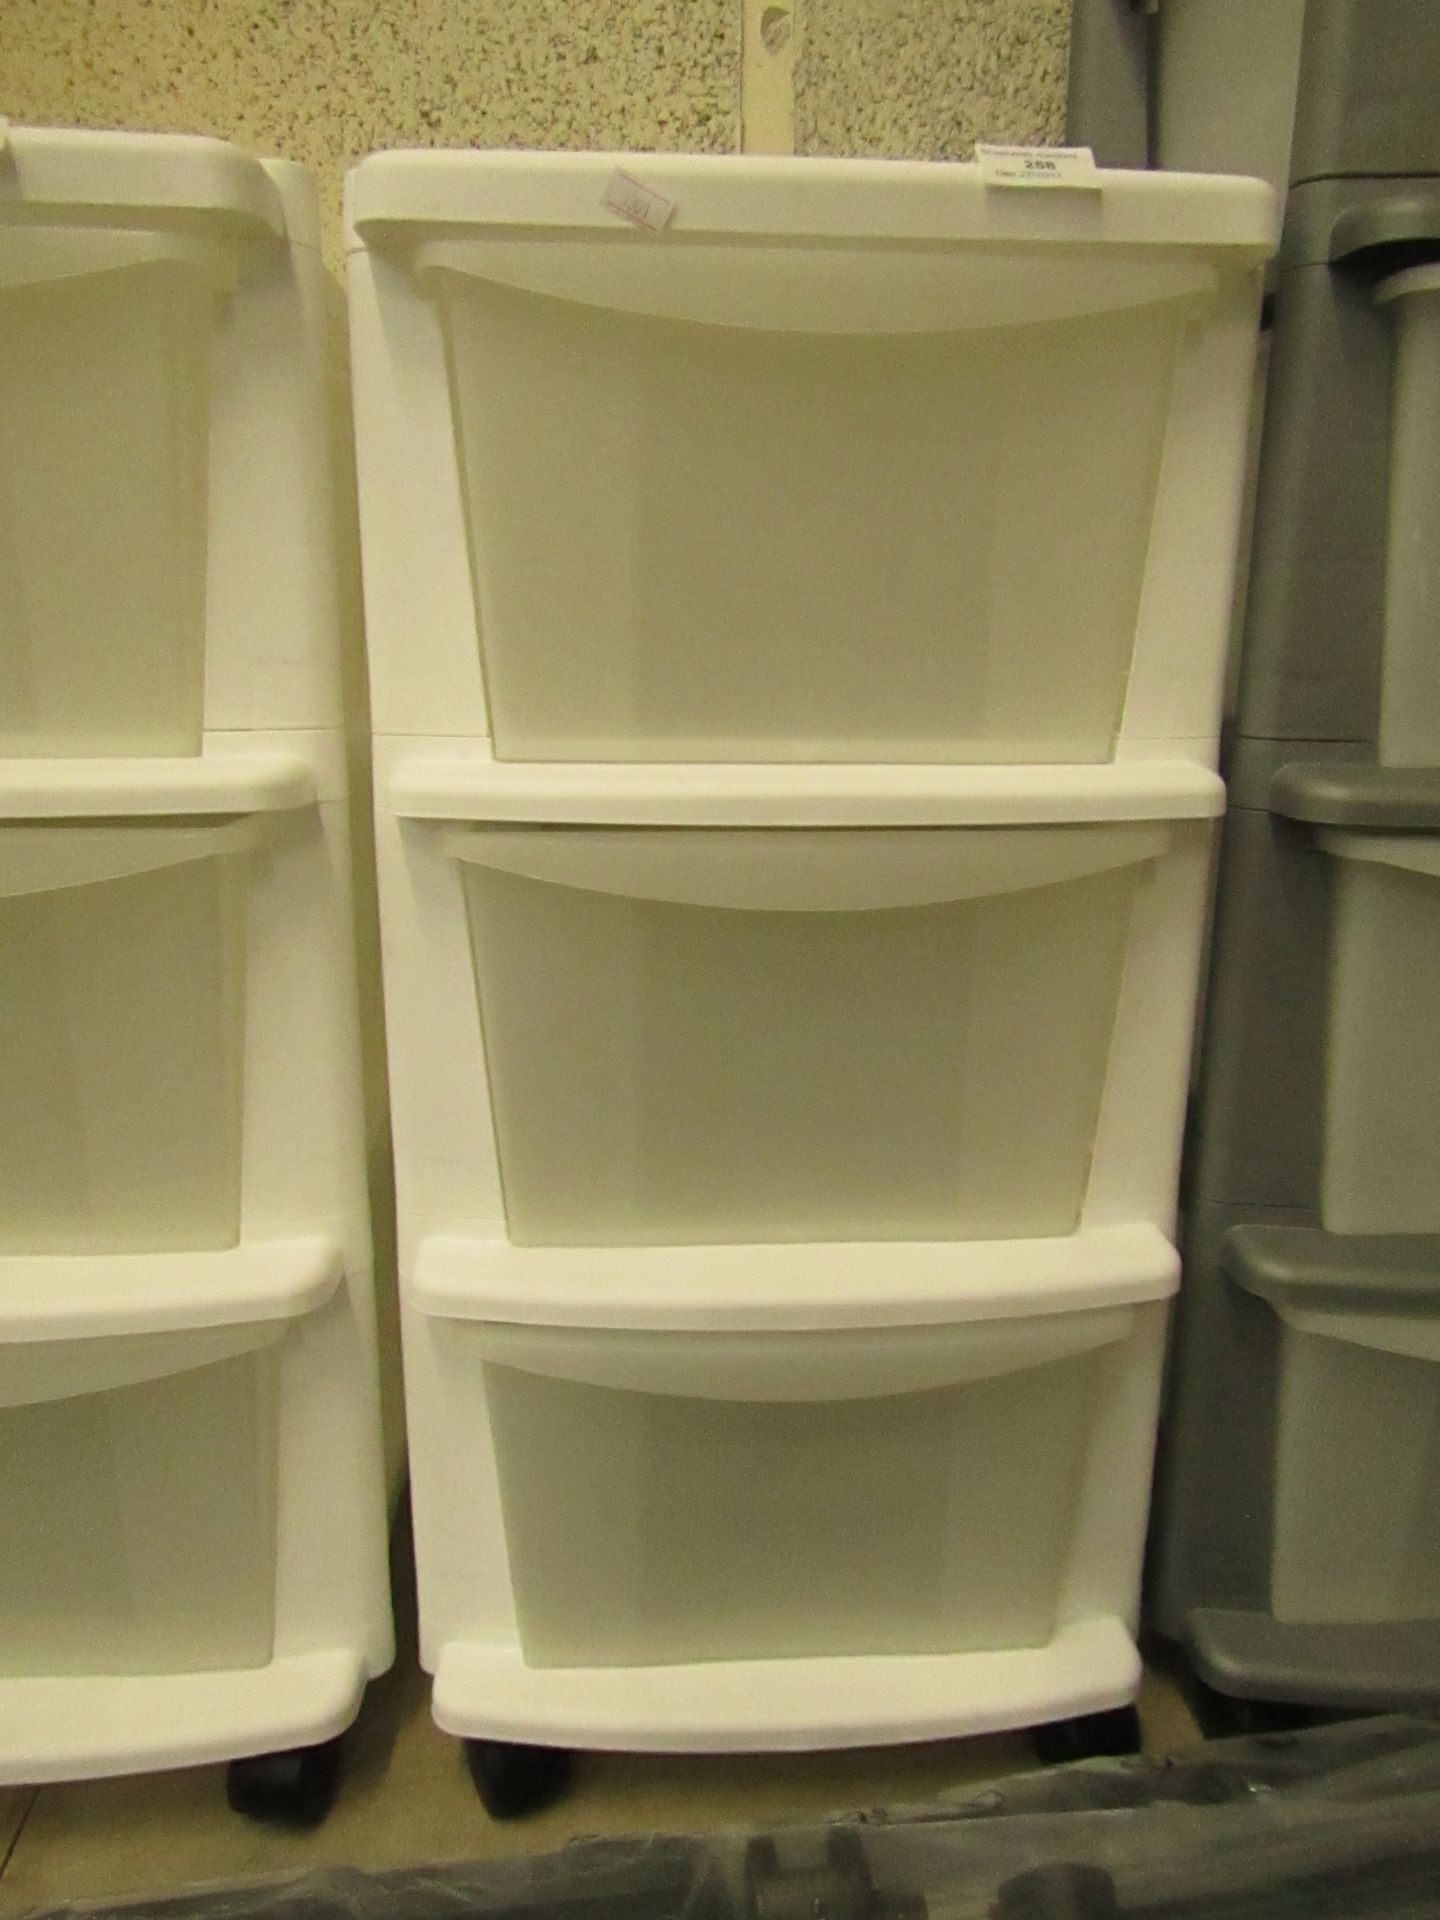 3 Draw storage box, white coloured.